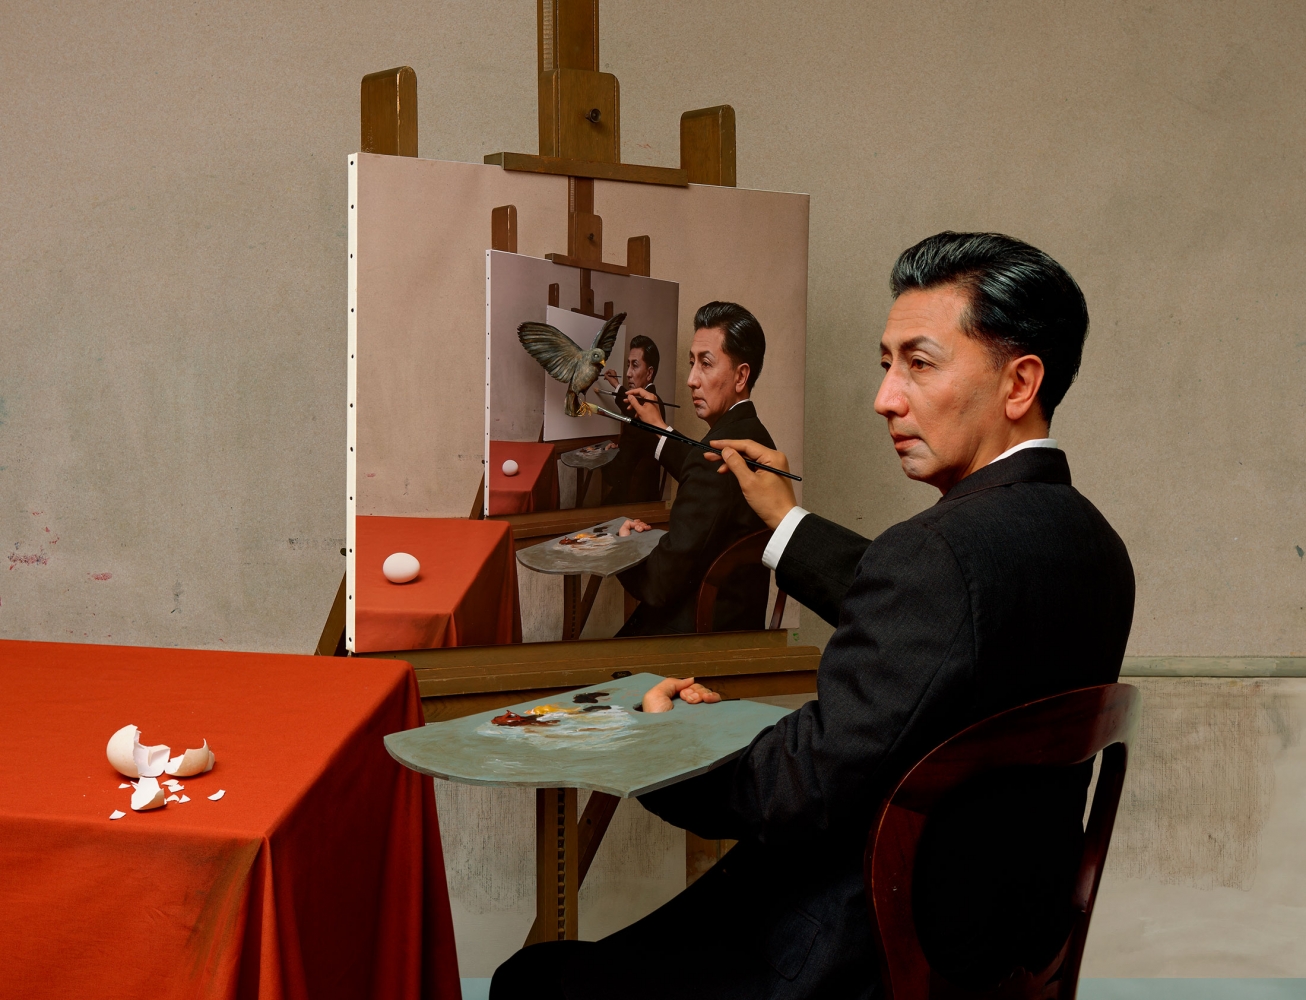 Yasumasa Morimura Self-Portraits through Art History (Magritte / Triple Personality), 2016